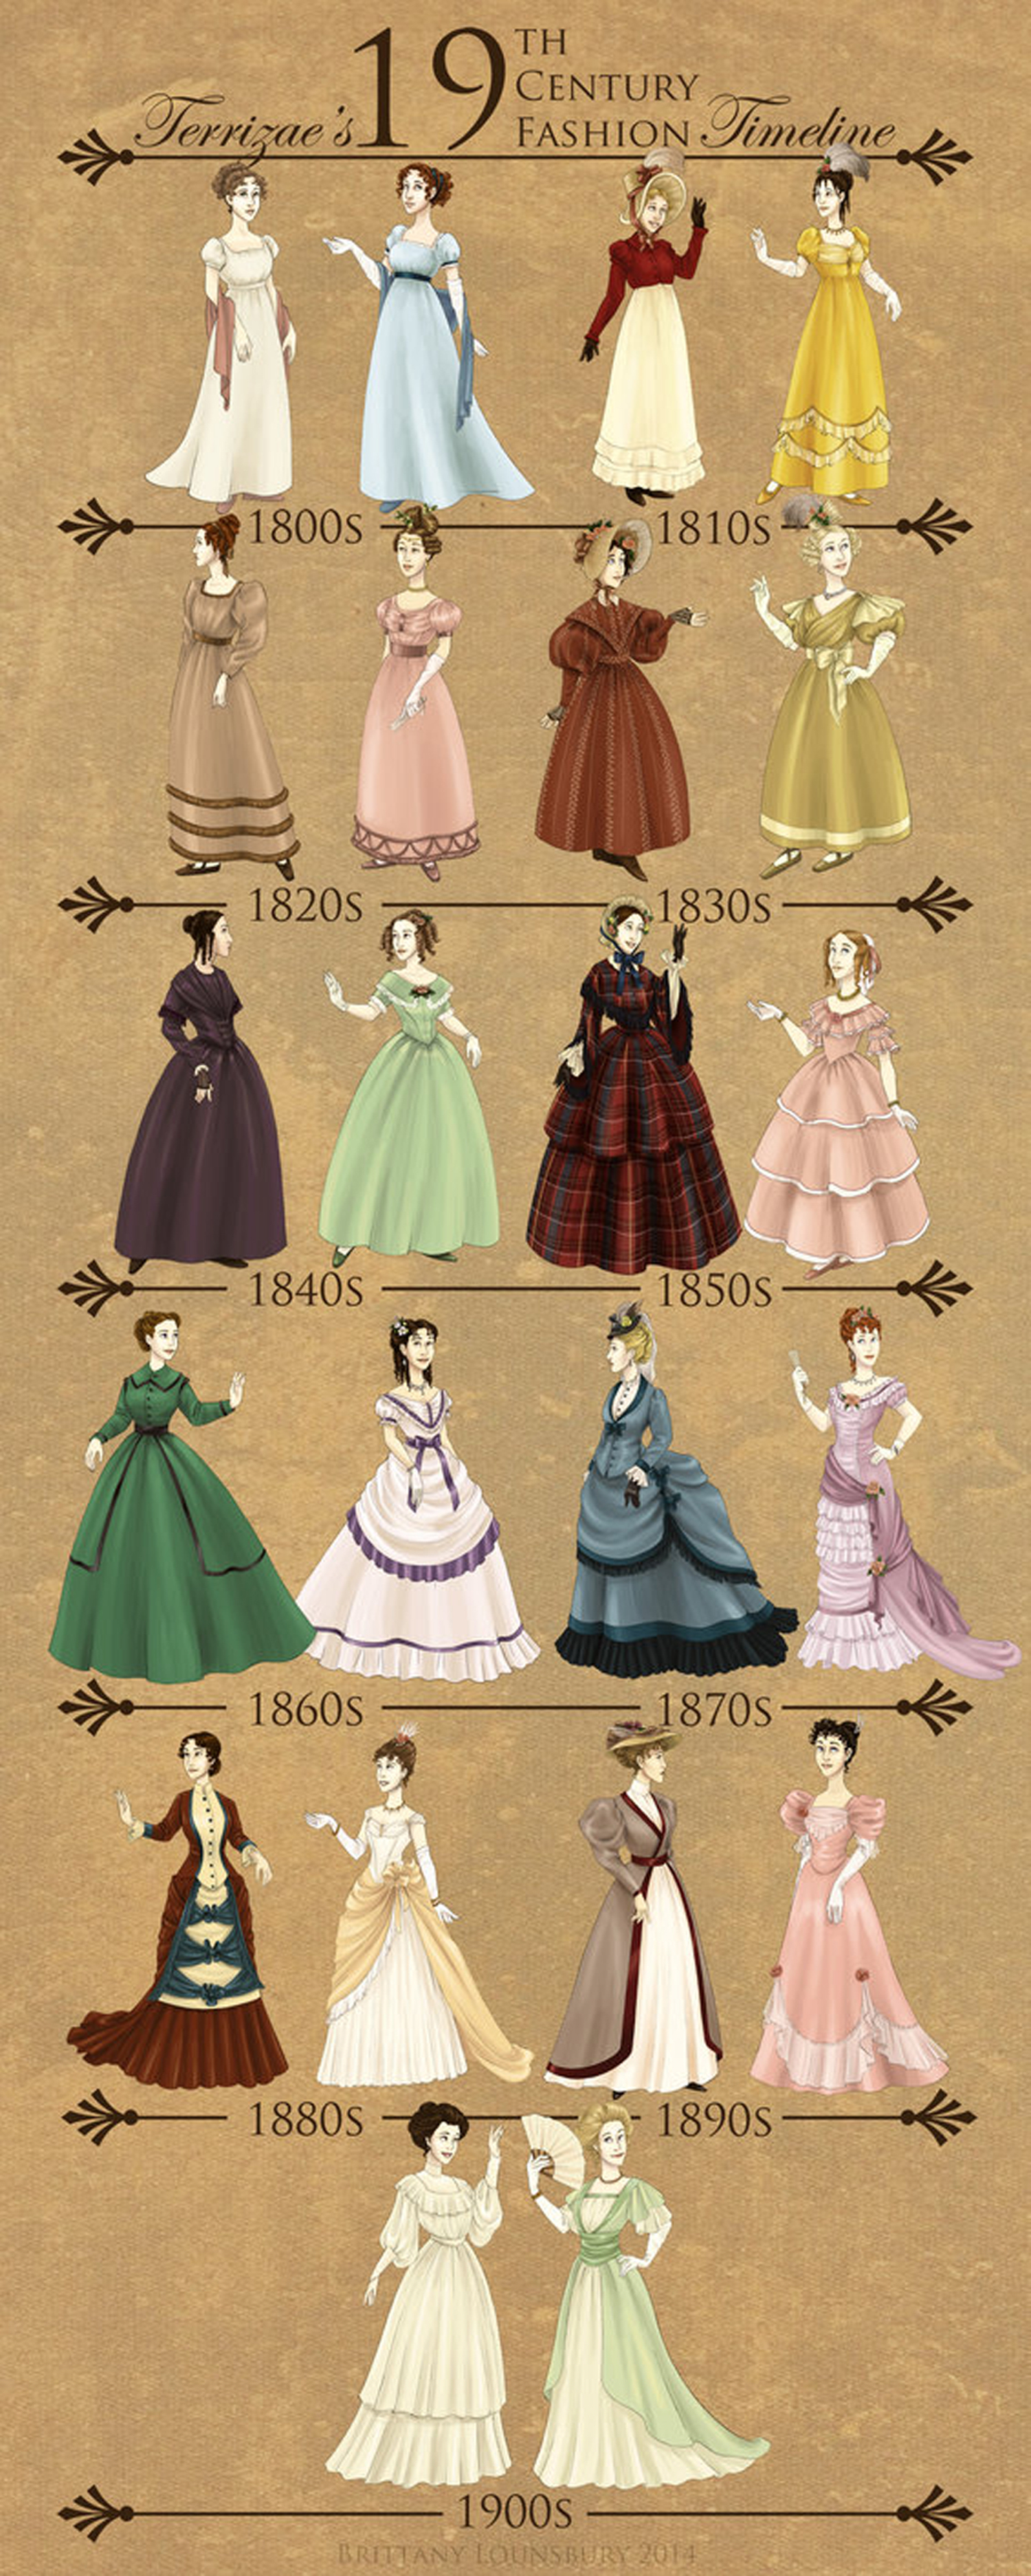 19th_century_fashion_timeline_by_terrizae-d7nel9y